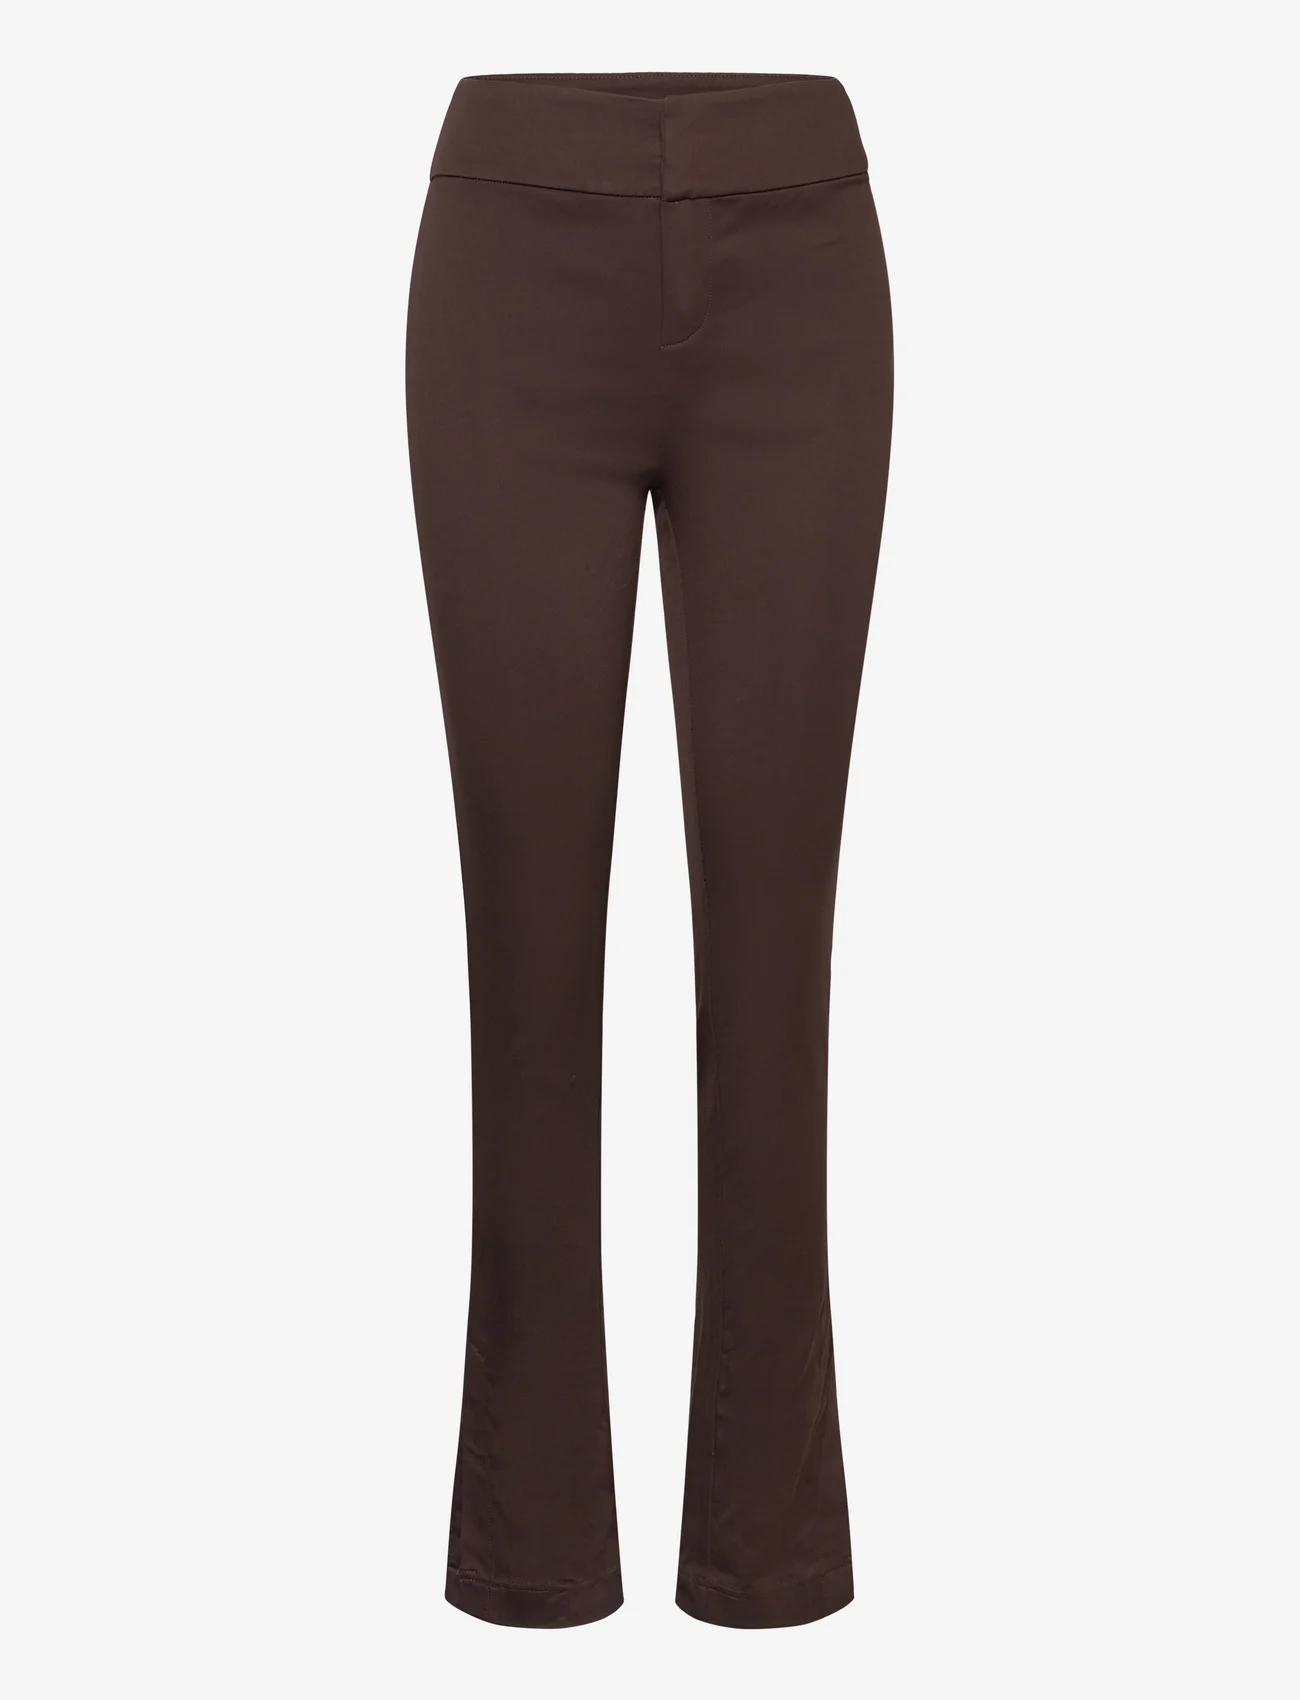 Rosemunde - Trousers w/ slit - slim fit bukser - black brown - 0